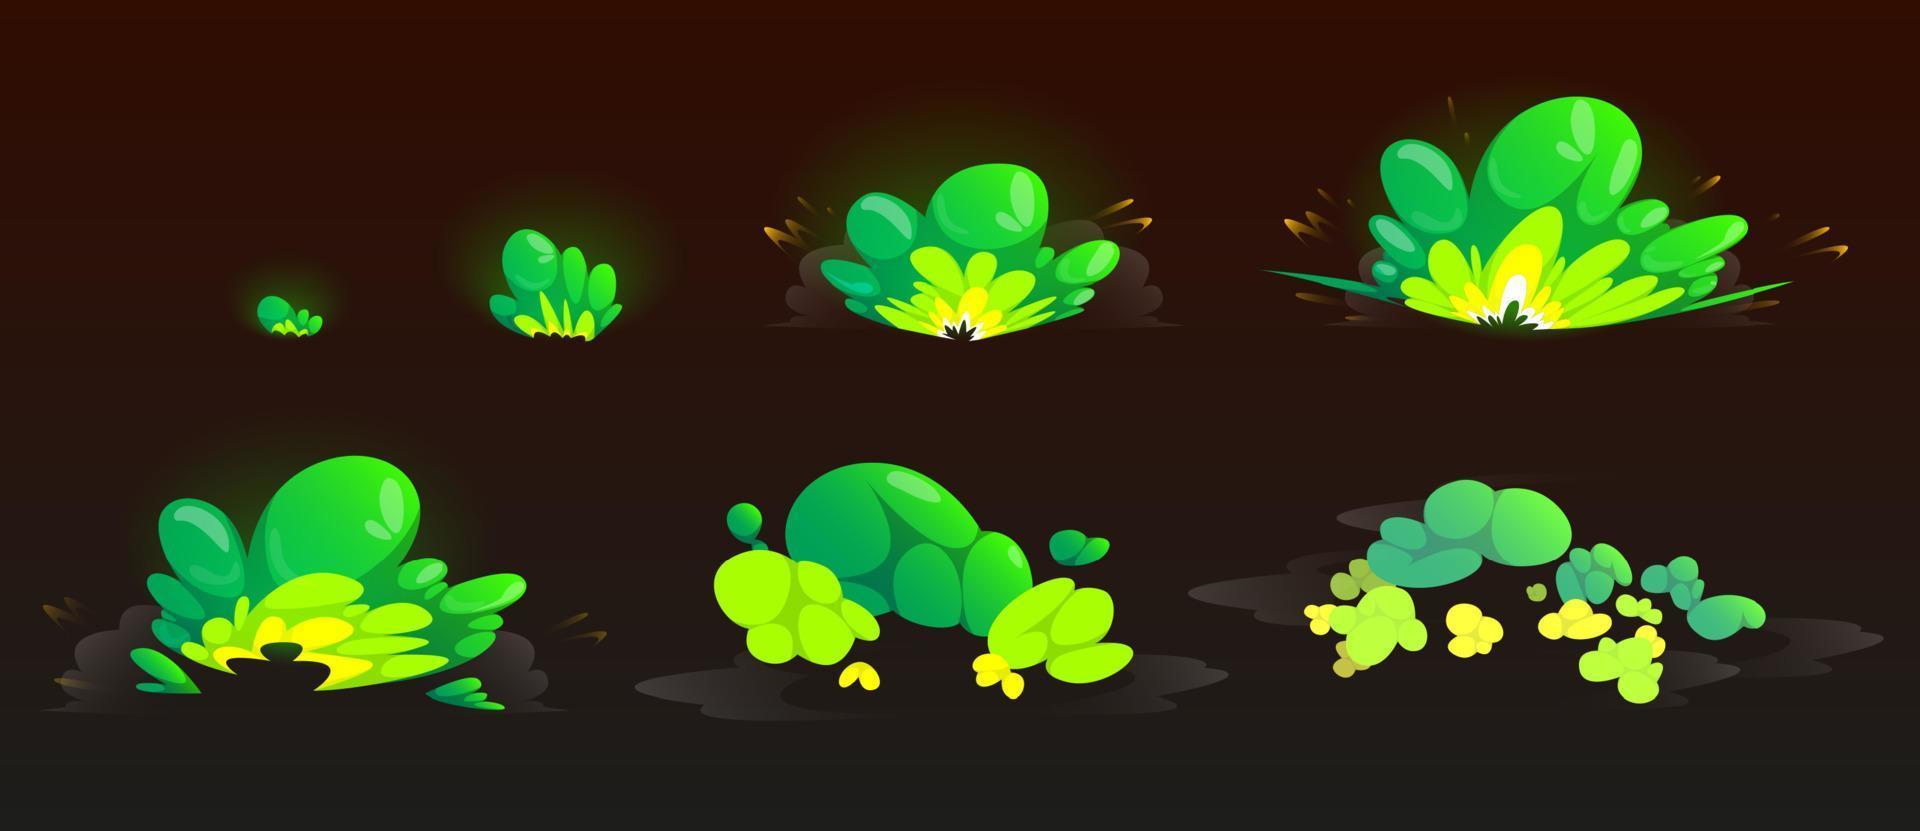 sprites de ráfaga verde para juegos o animación vector